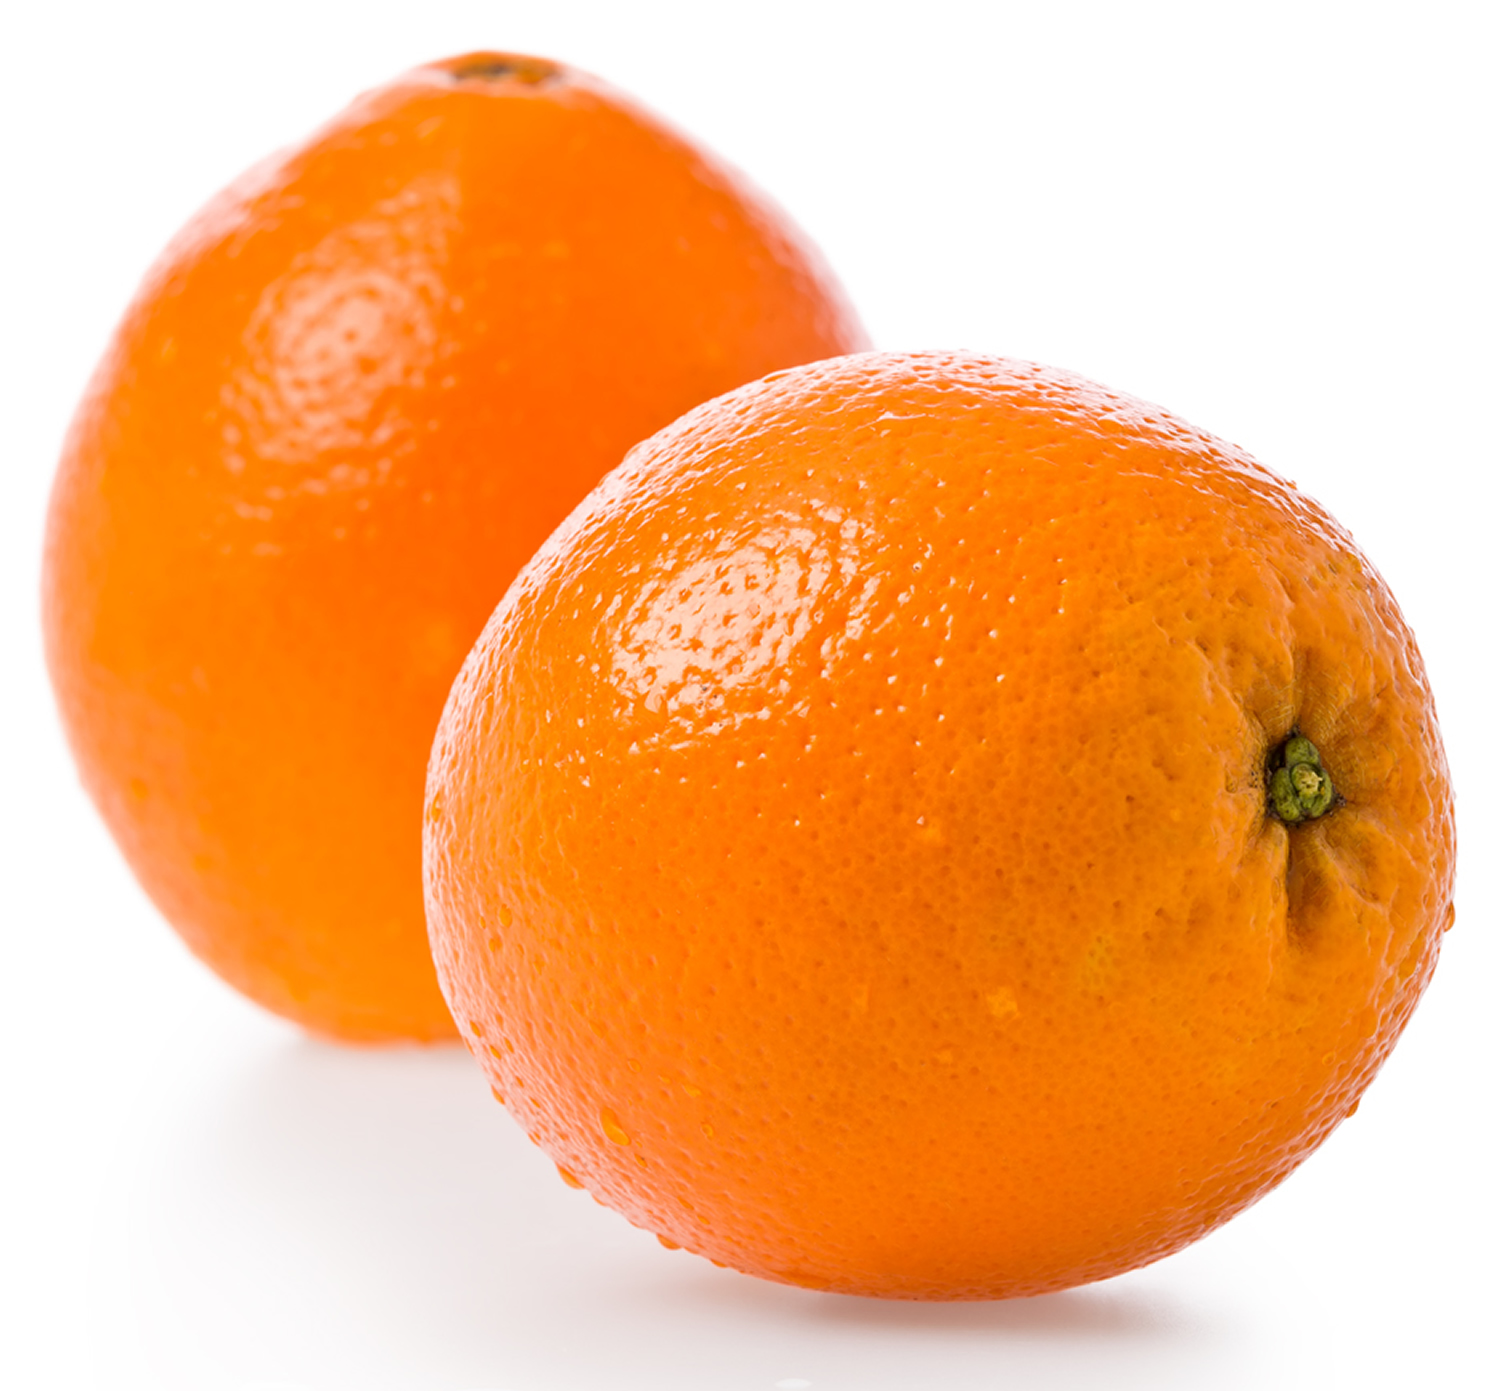 Orange Fruit - Types, Nutrition Facts & Health Benefits